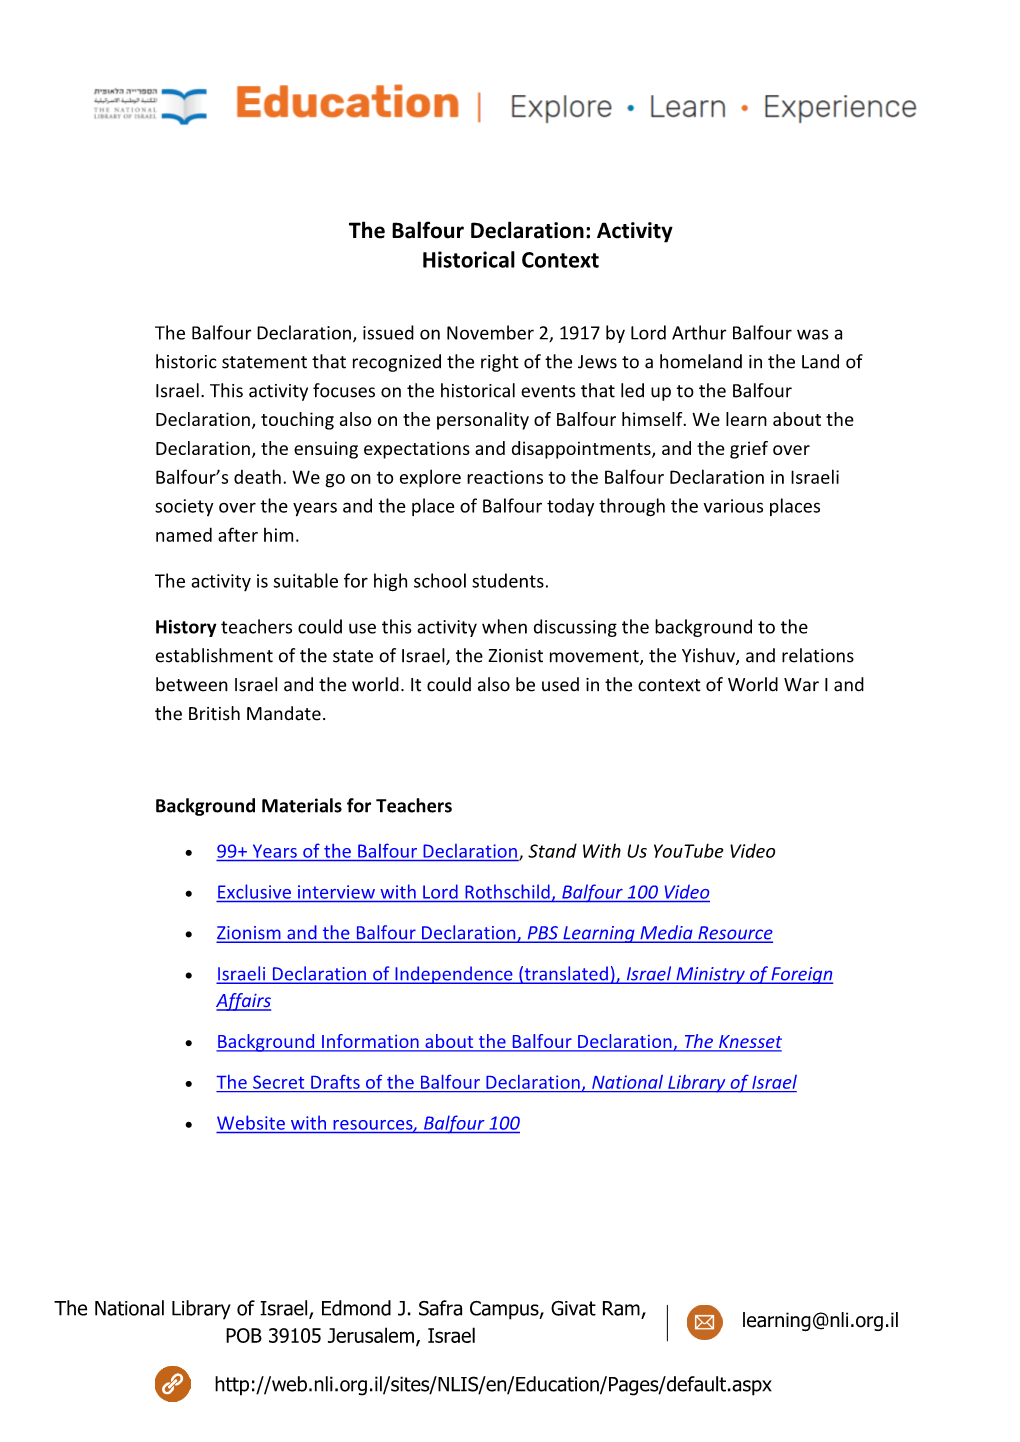 The Balfour Declaration: Activity Historical Context